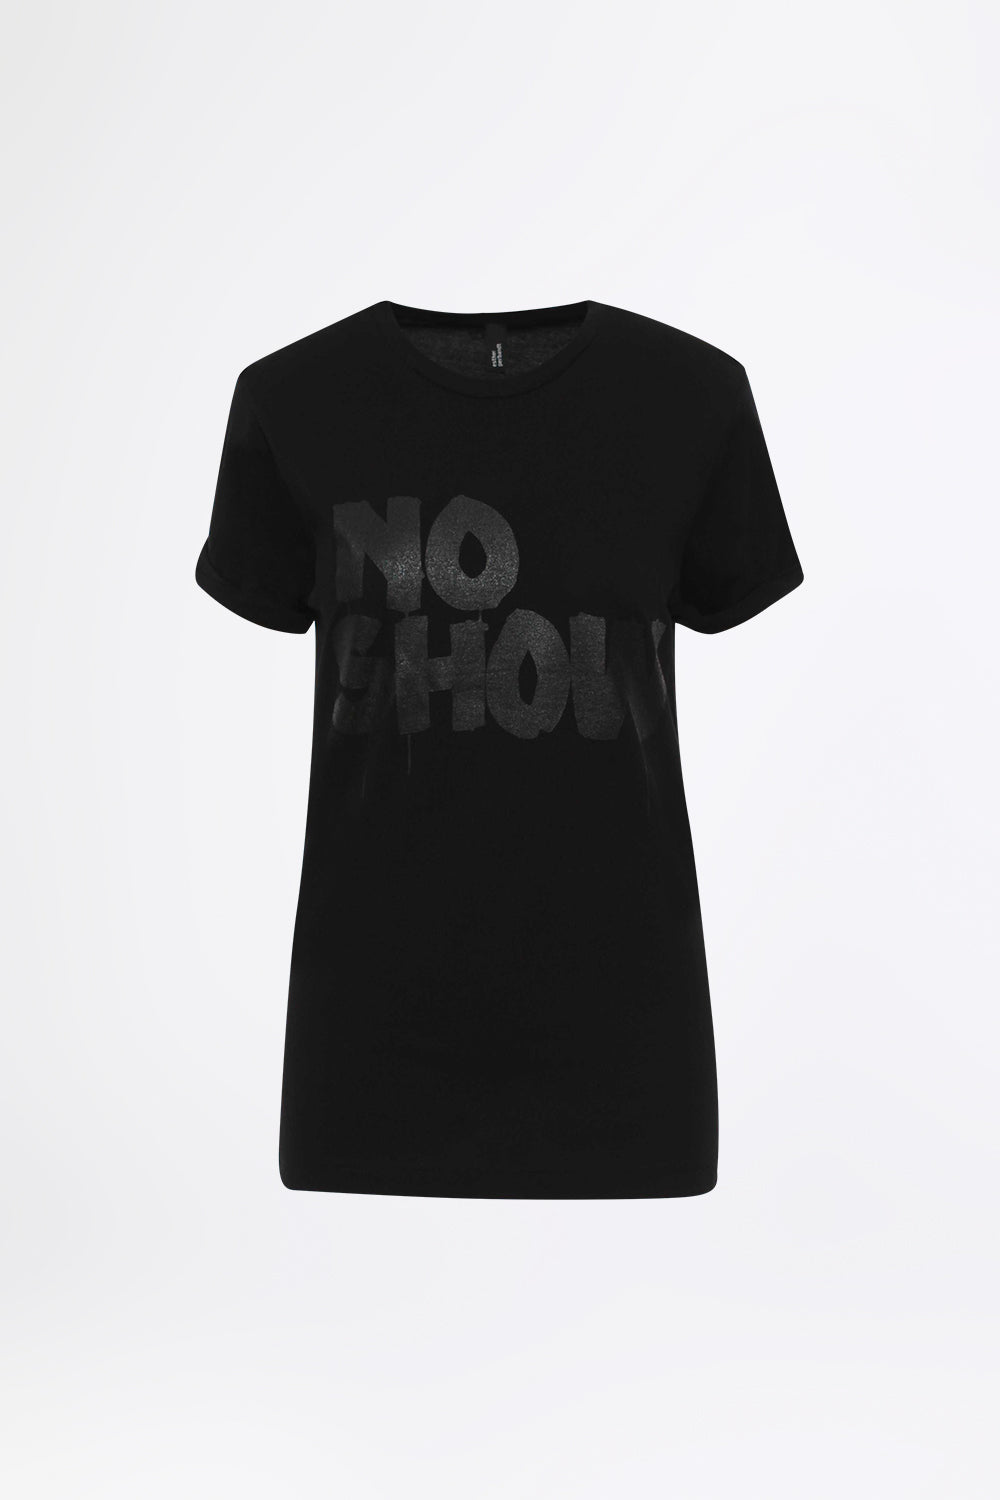 NO SHOW Black - Statement T-shirt - Men